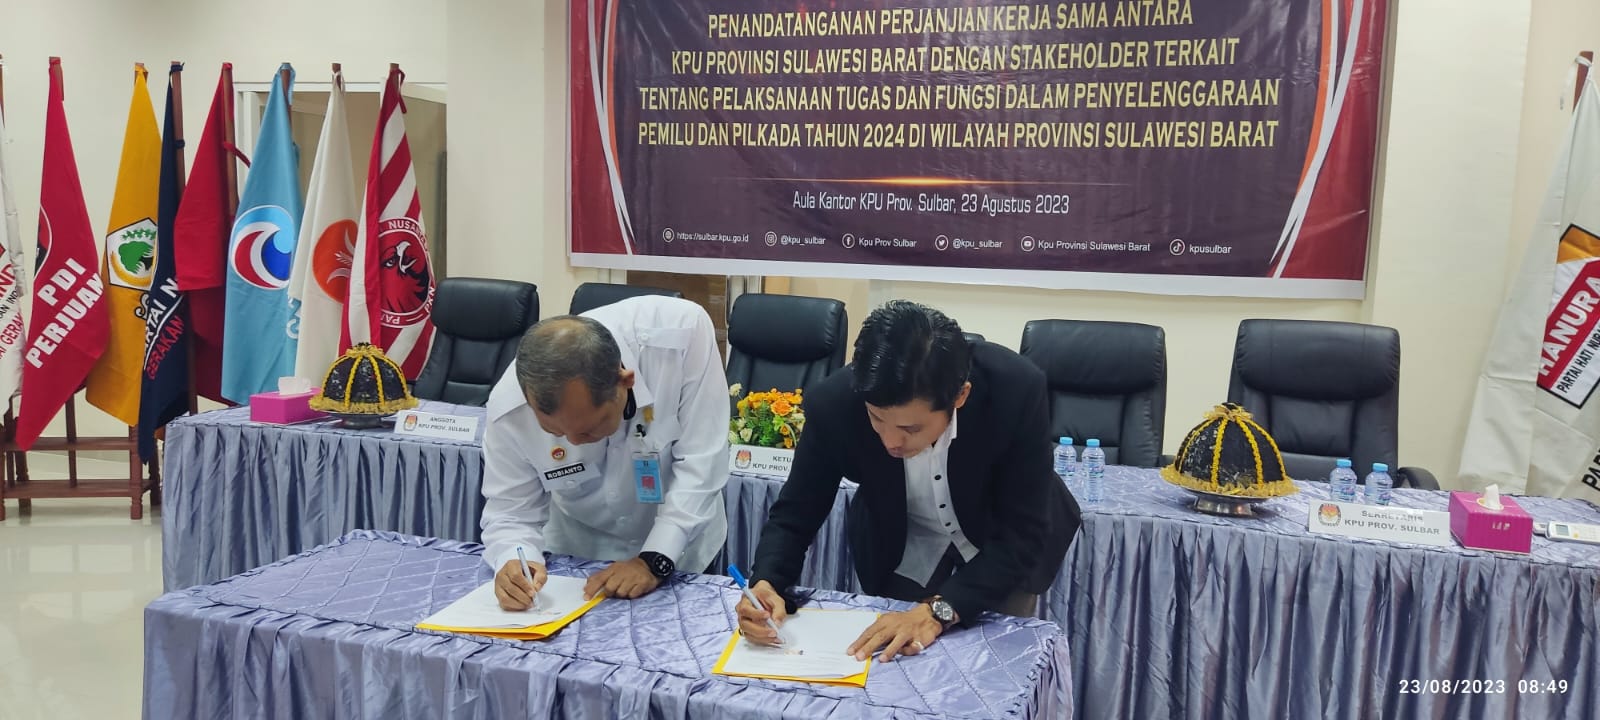 Kemenkumham Sulawesi Barat teken kerja sama dengan KPU Provinsi Sulawesi Barat (dok. Istimewa)